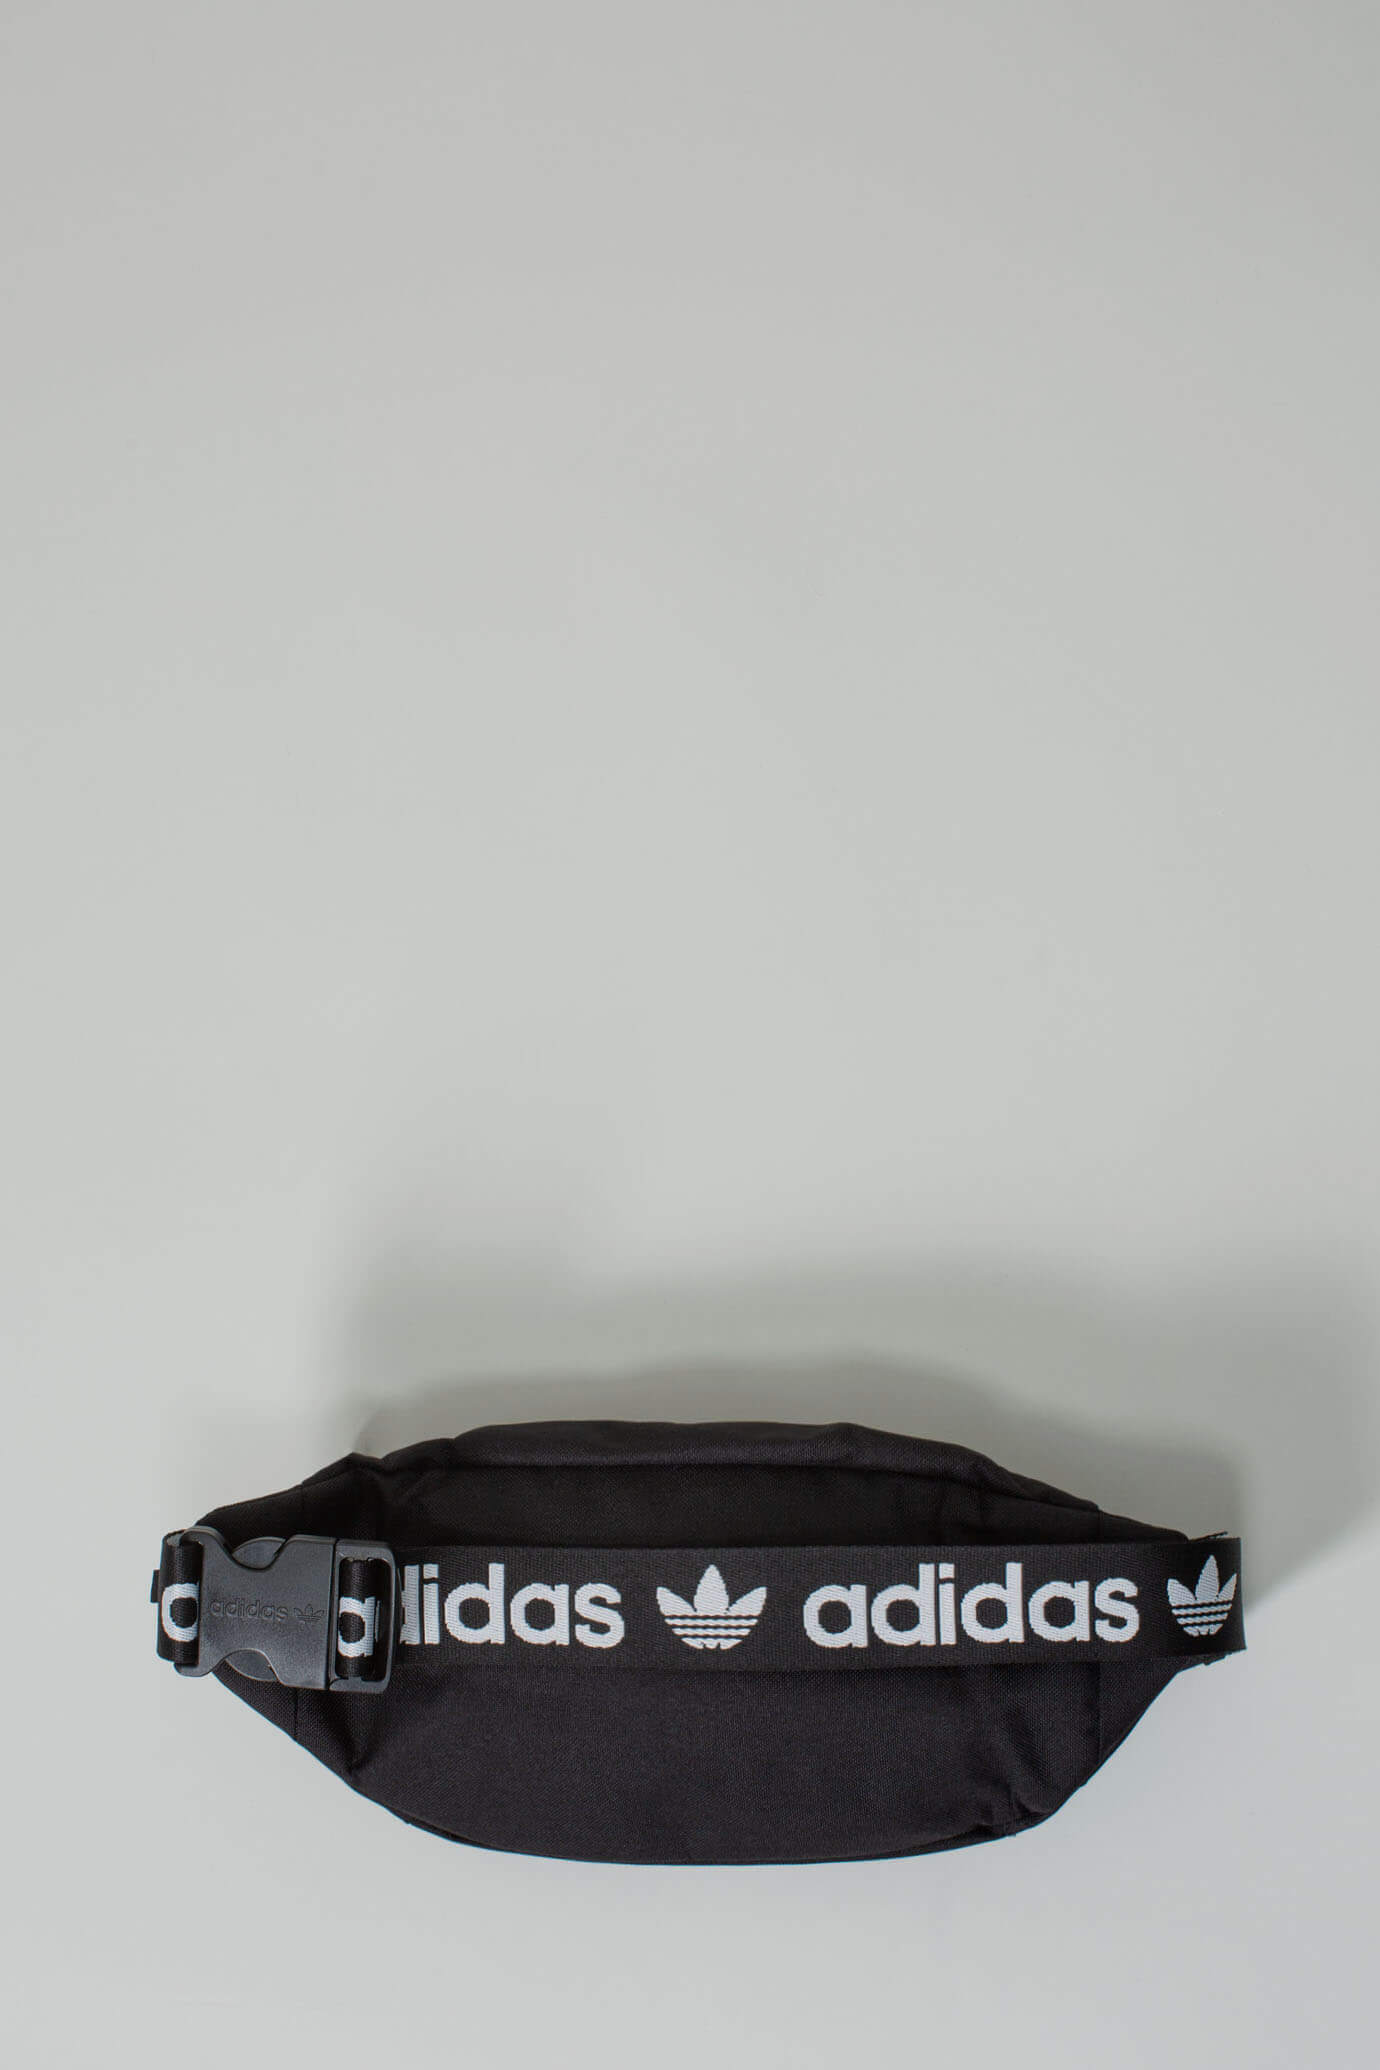 adidas Originals Adicolor Classic Waist Bag / Black